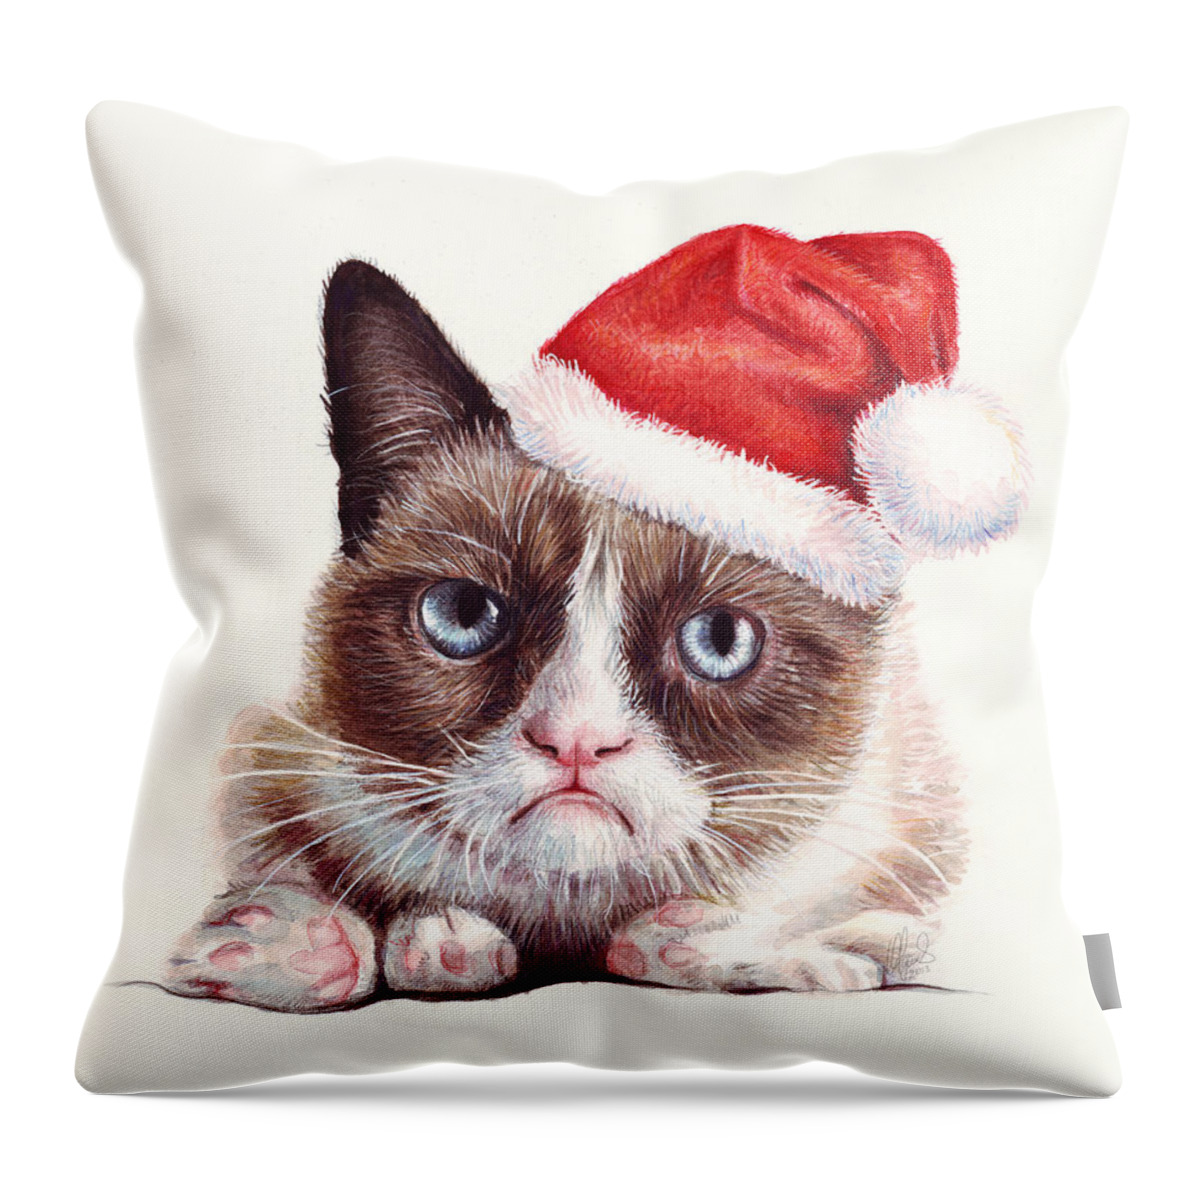 Grumpy Throw Pillow featuring the painting Grumpy Cat as Santa by Olga Shvartsur